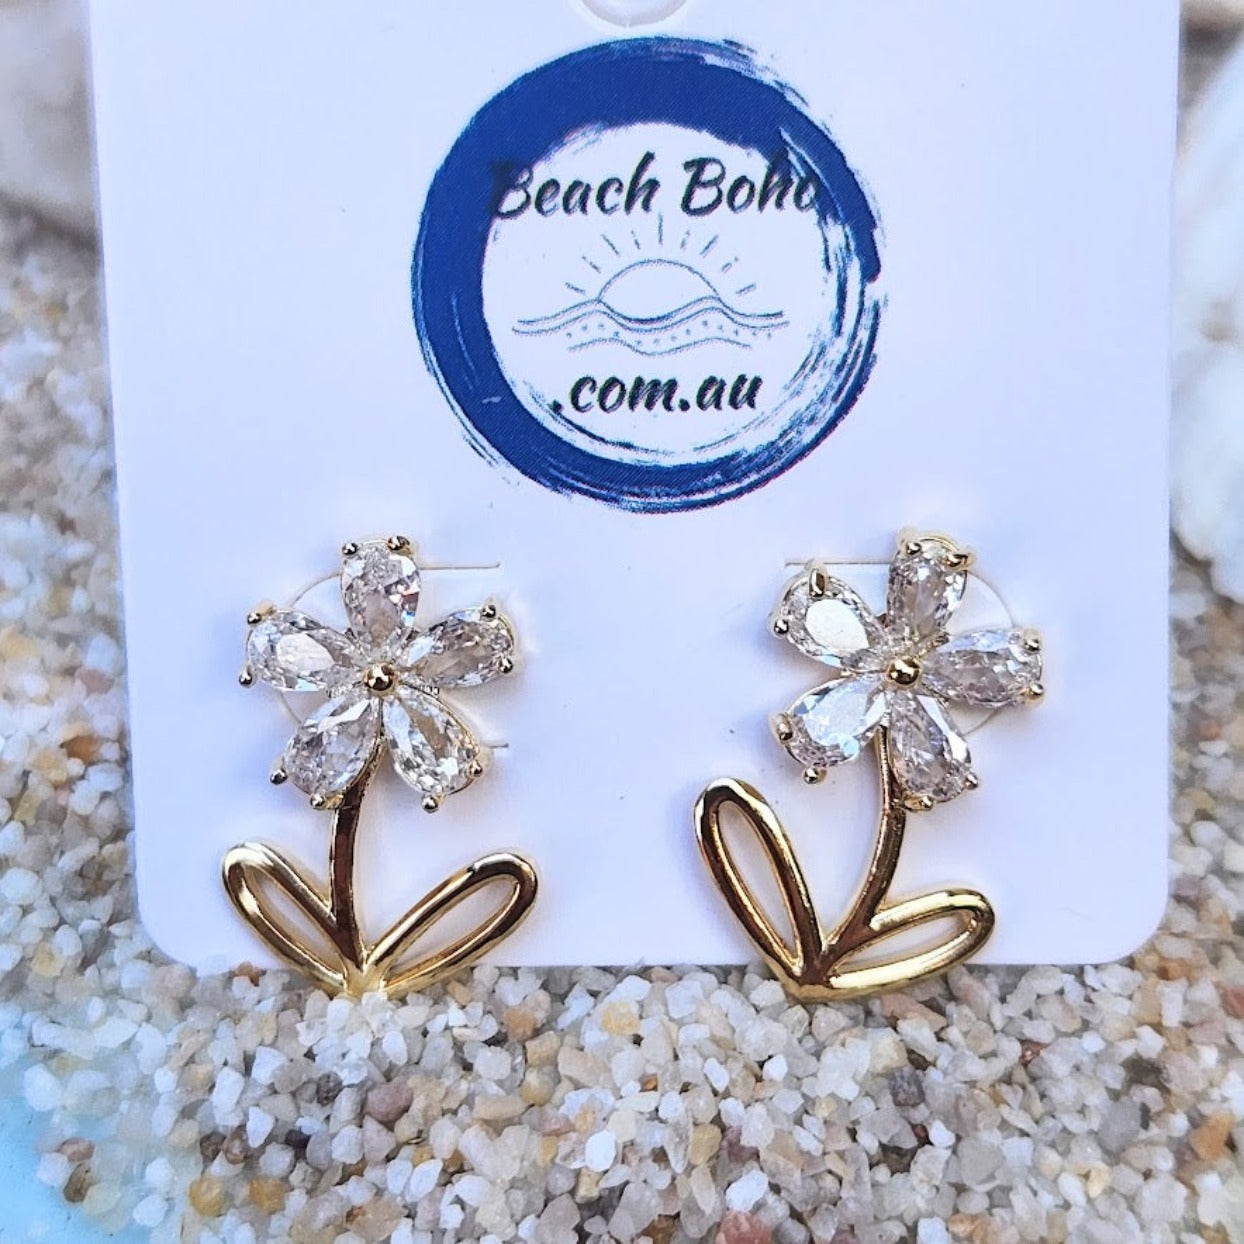 DAISIES  - CUBIC ZIRCONIA GOLD STUD EARRINGS - Premium earrings from www.beachboho.com.au - Just $40! Shop now at www.beachboho.com.au